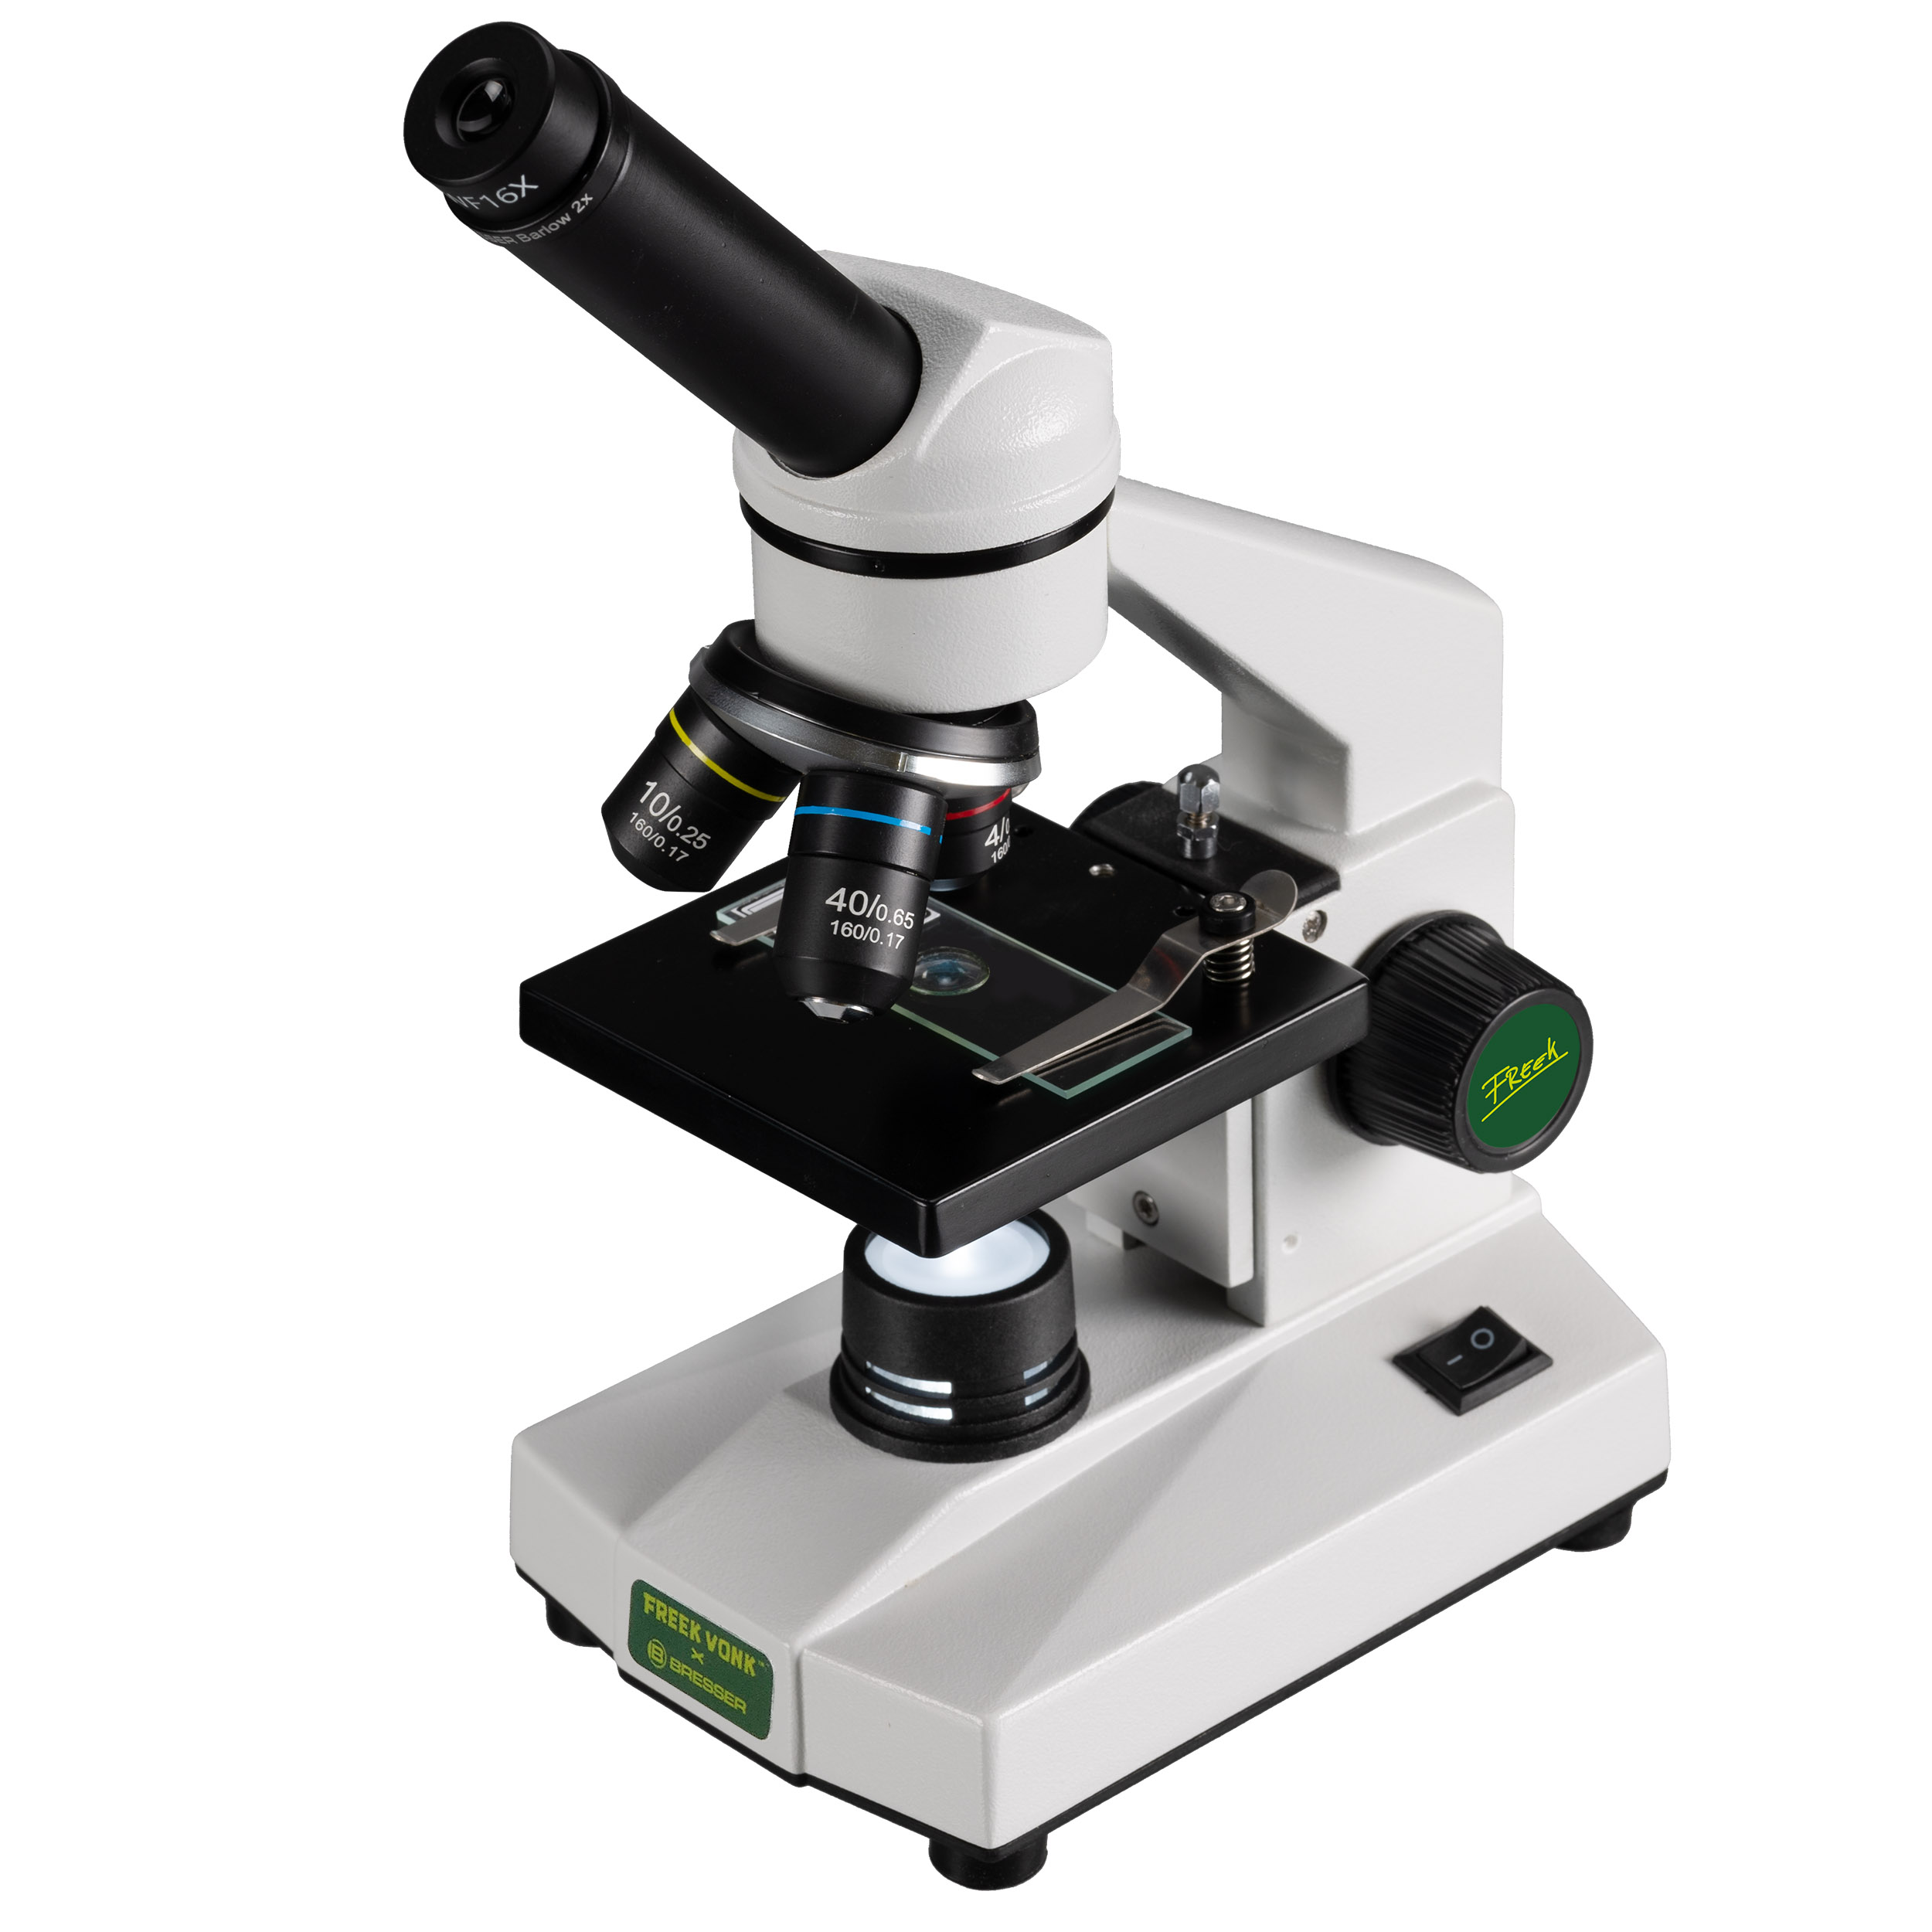 FREEK VONK x BRESSER Biolux Microscope